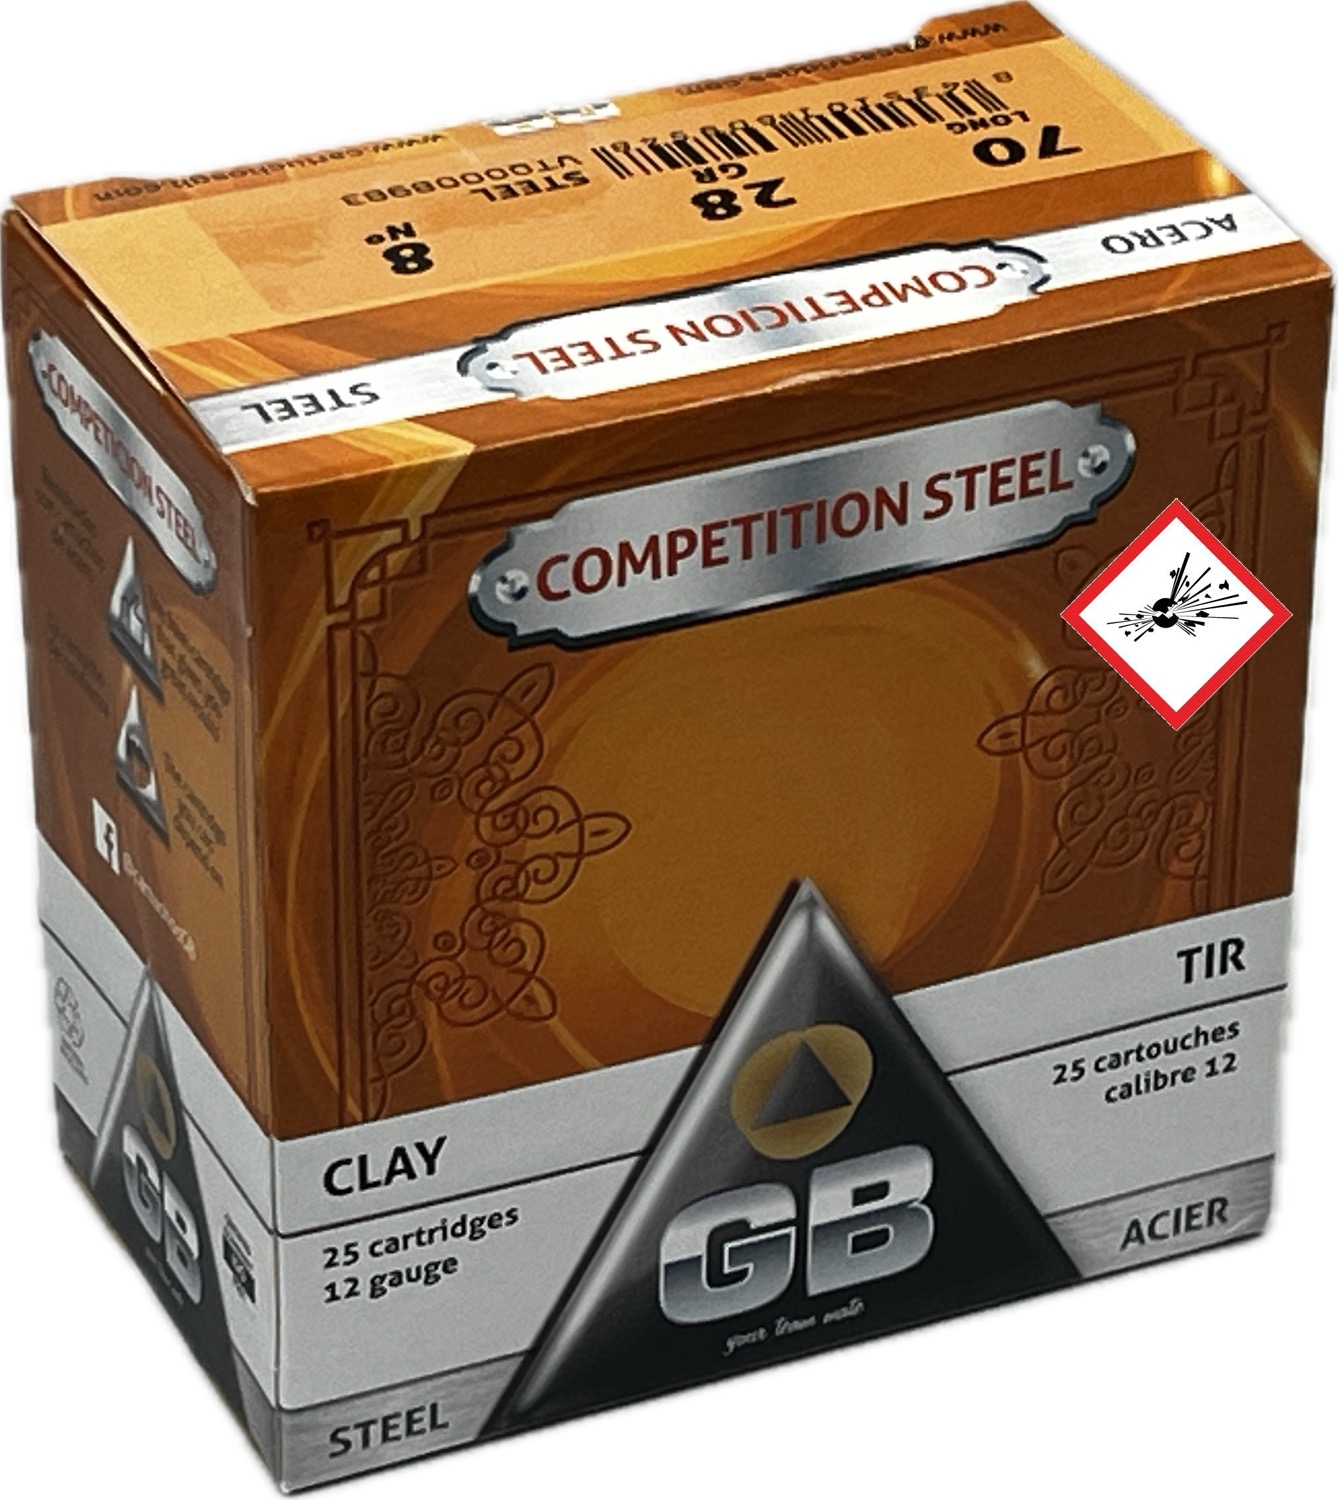 204217_garate-y-block-competition-steel-12-70